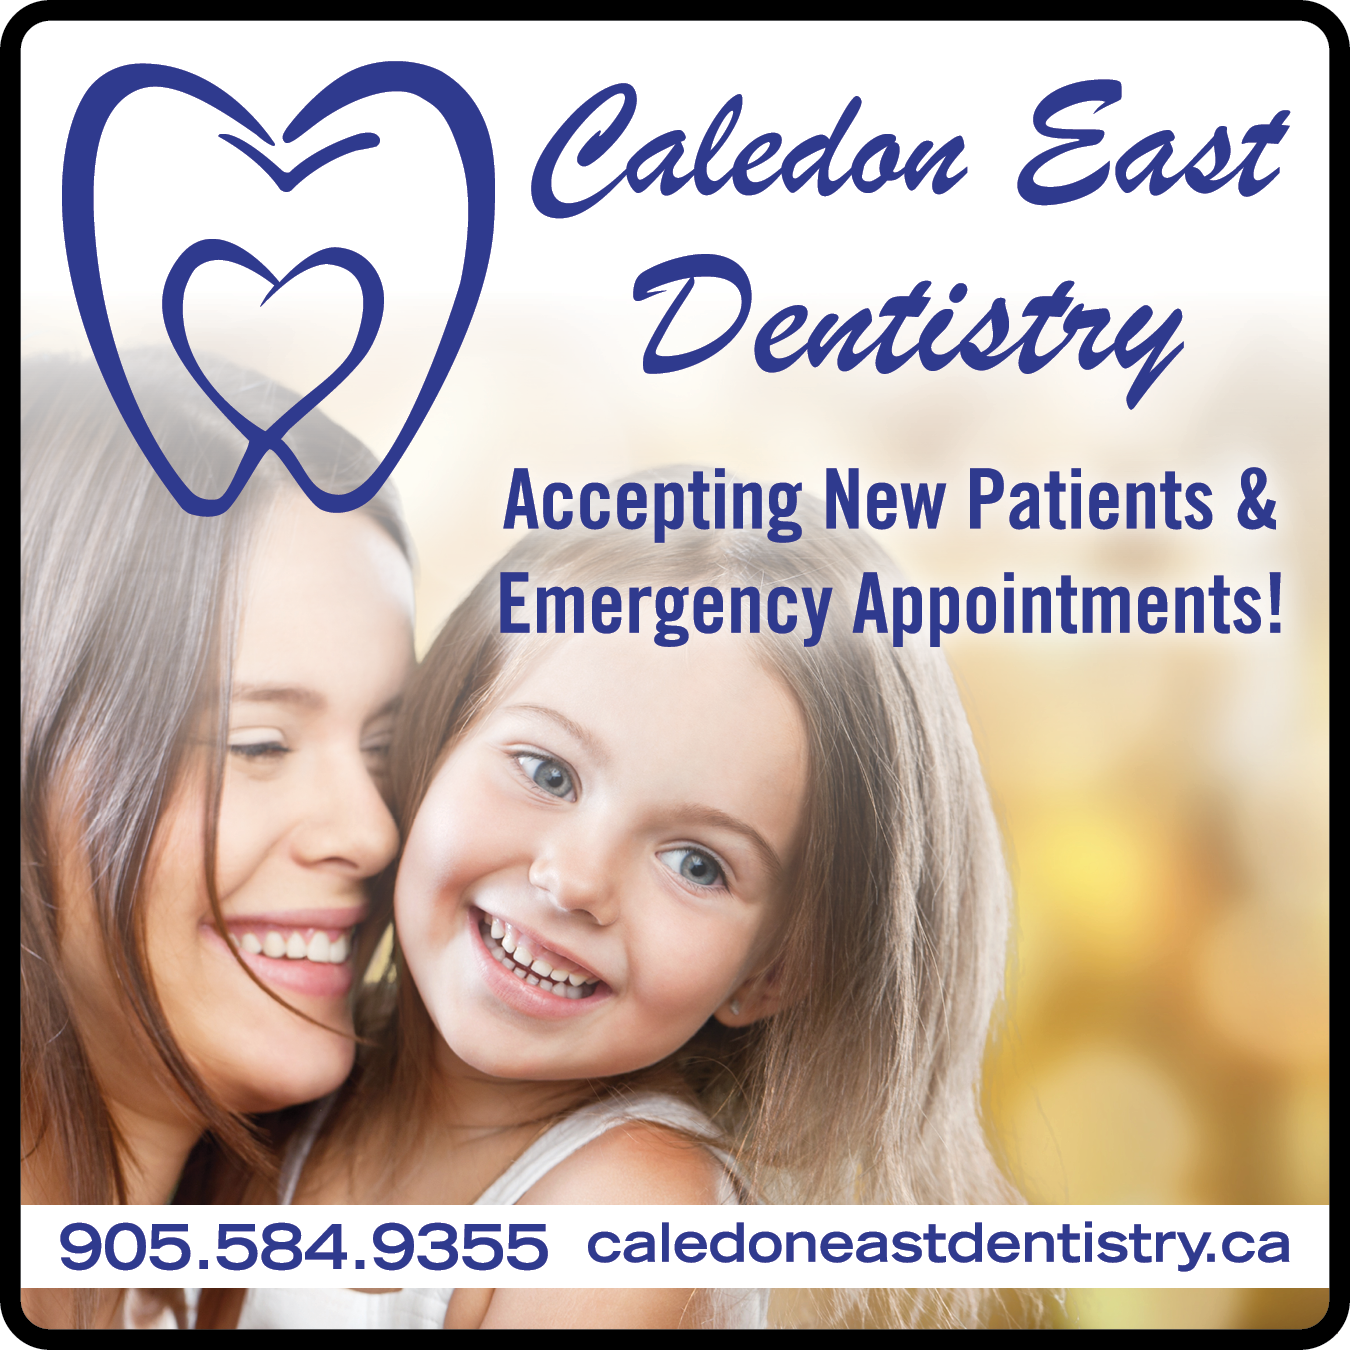 Caledon East Dentistry